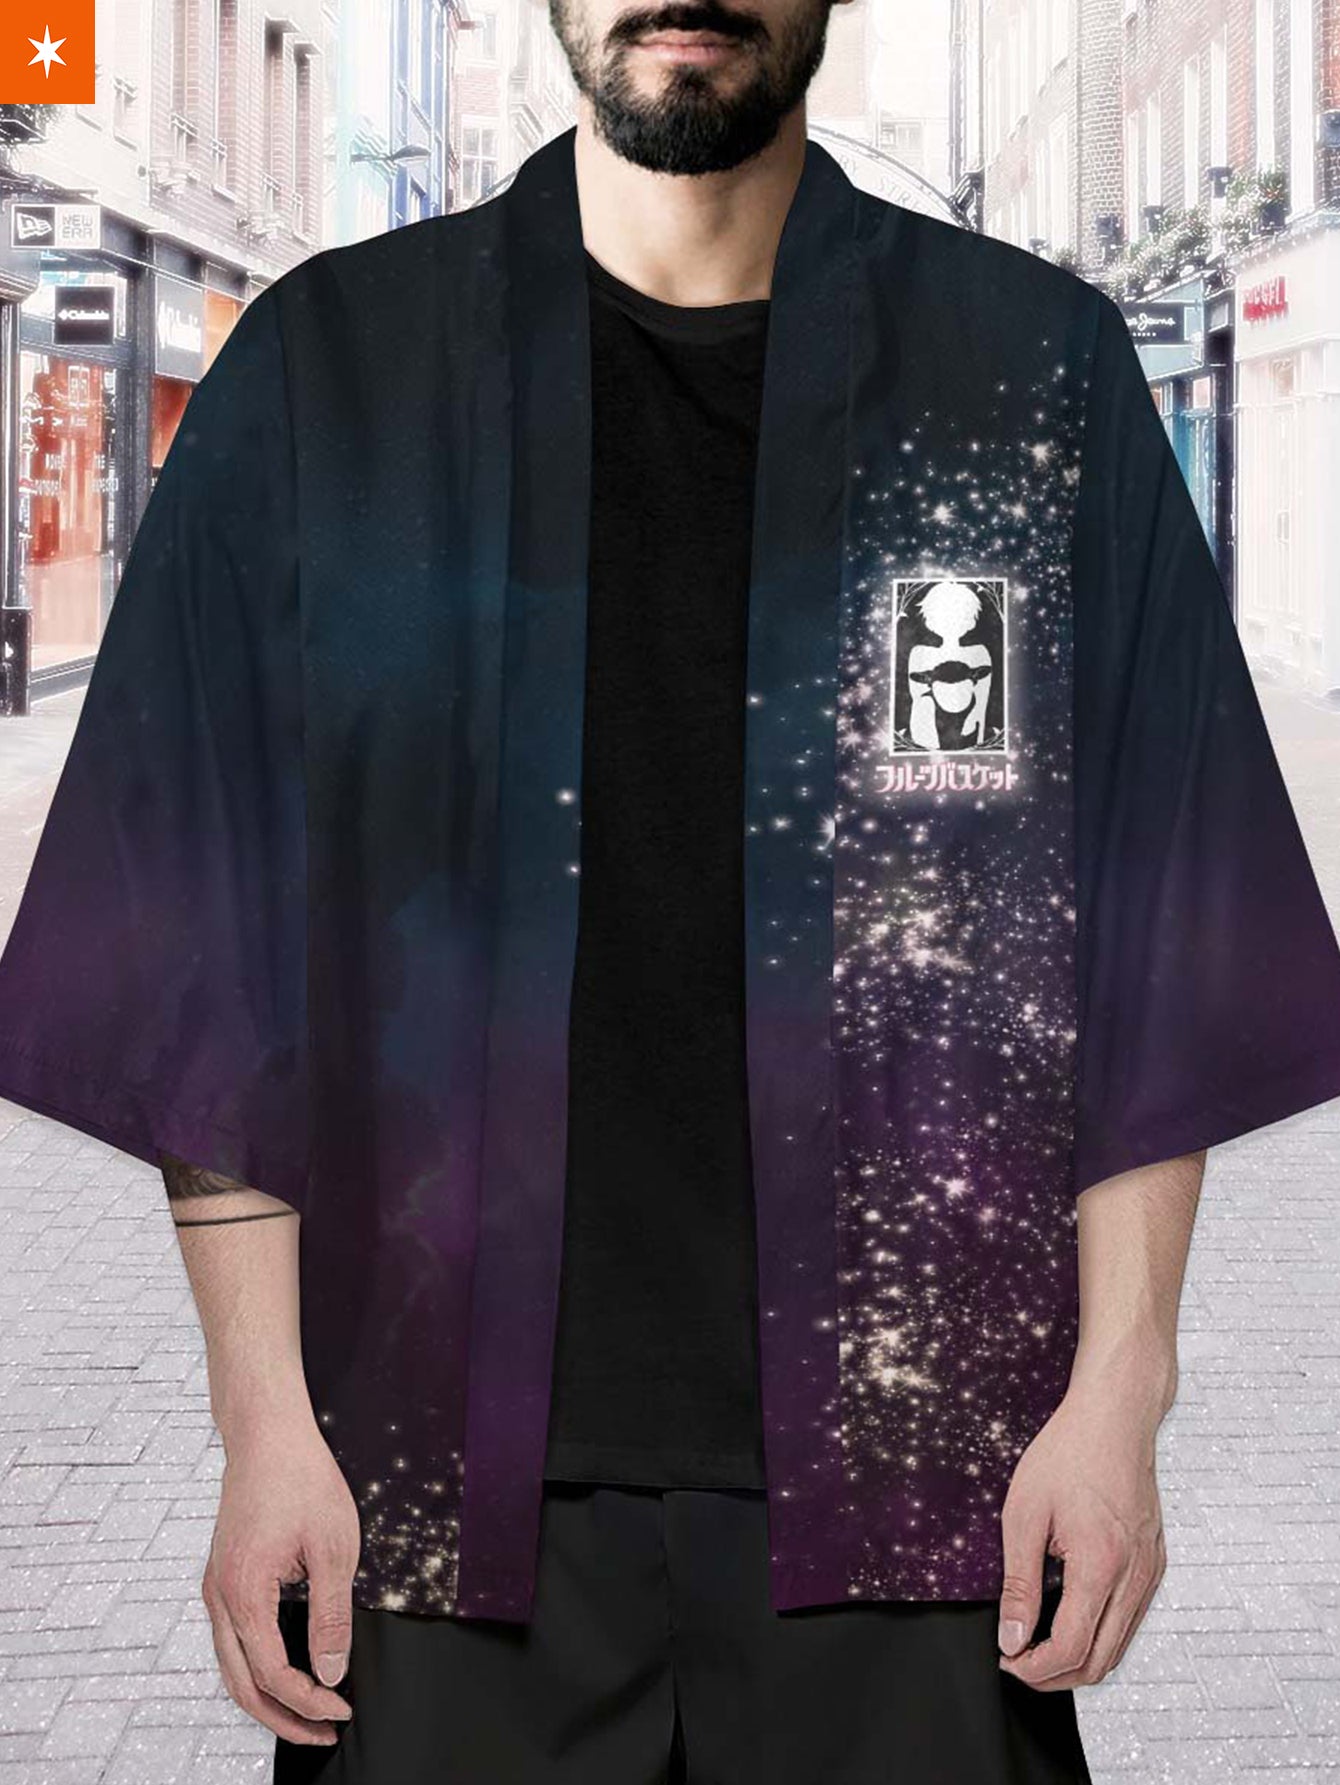 Fandomaniax - Hiro Spirit Kimono